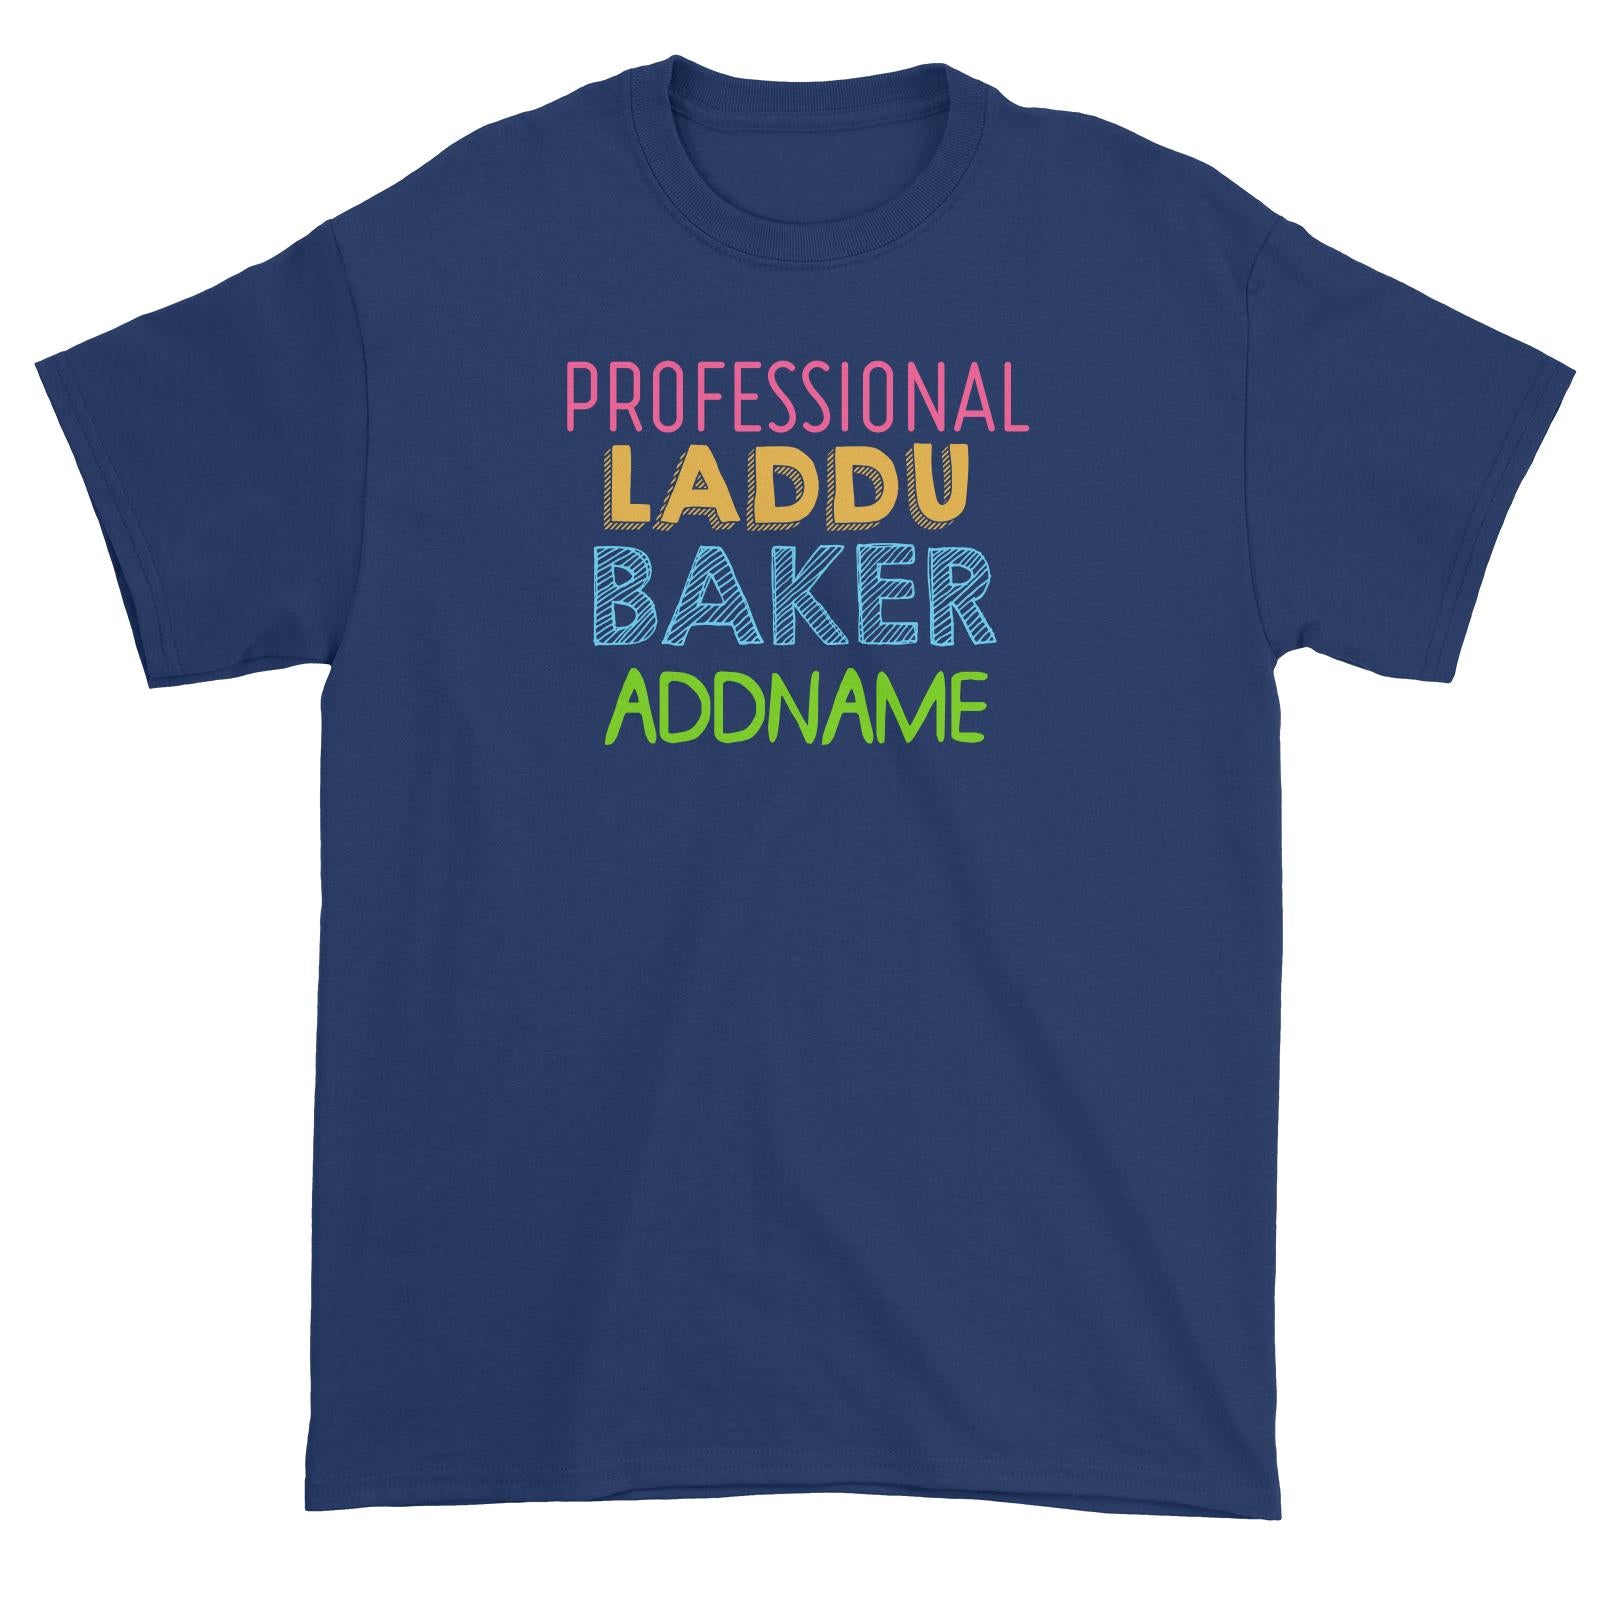 Professional Laddu Baker Addname Unisex T-Shirt